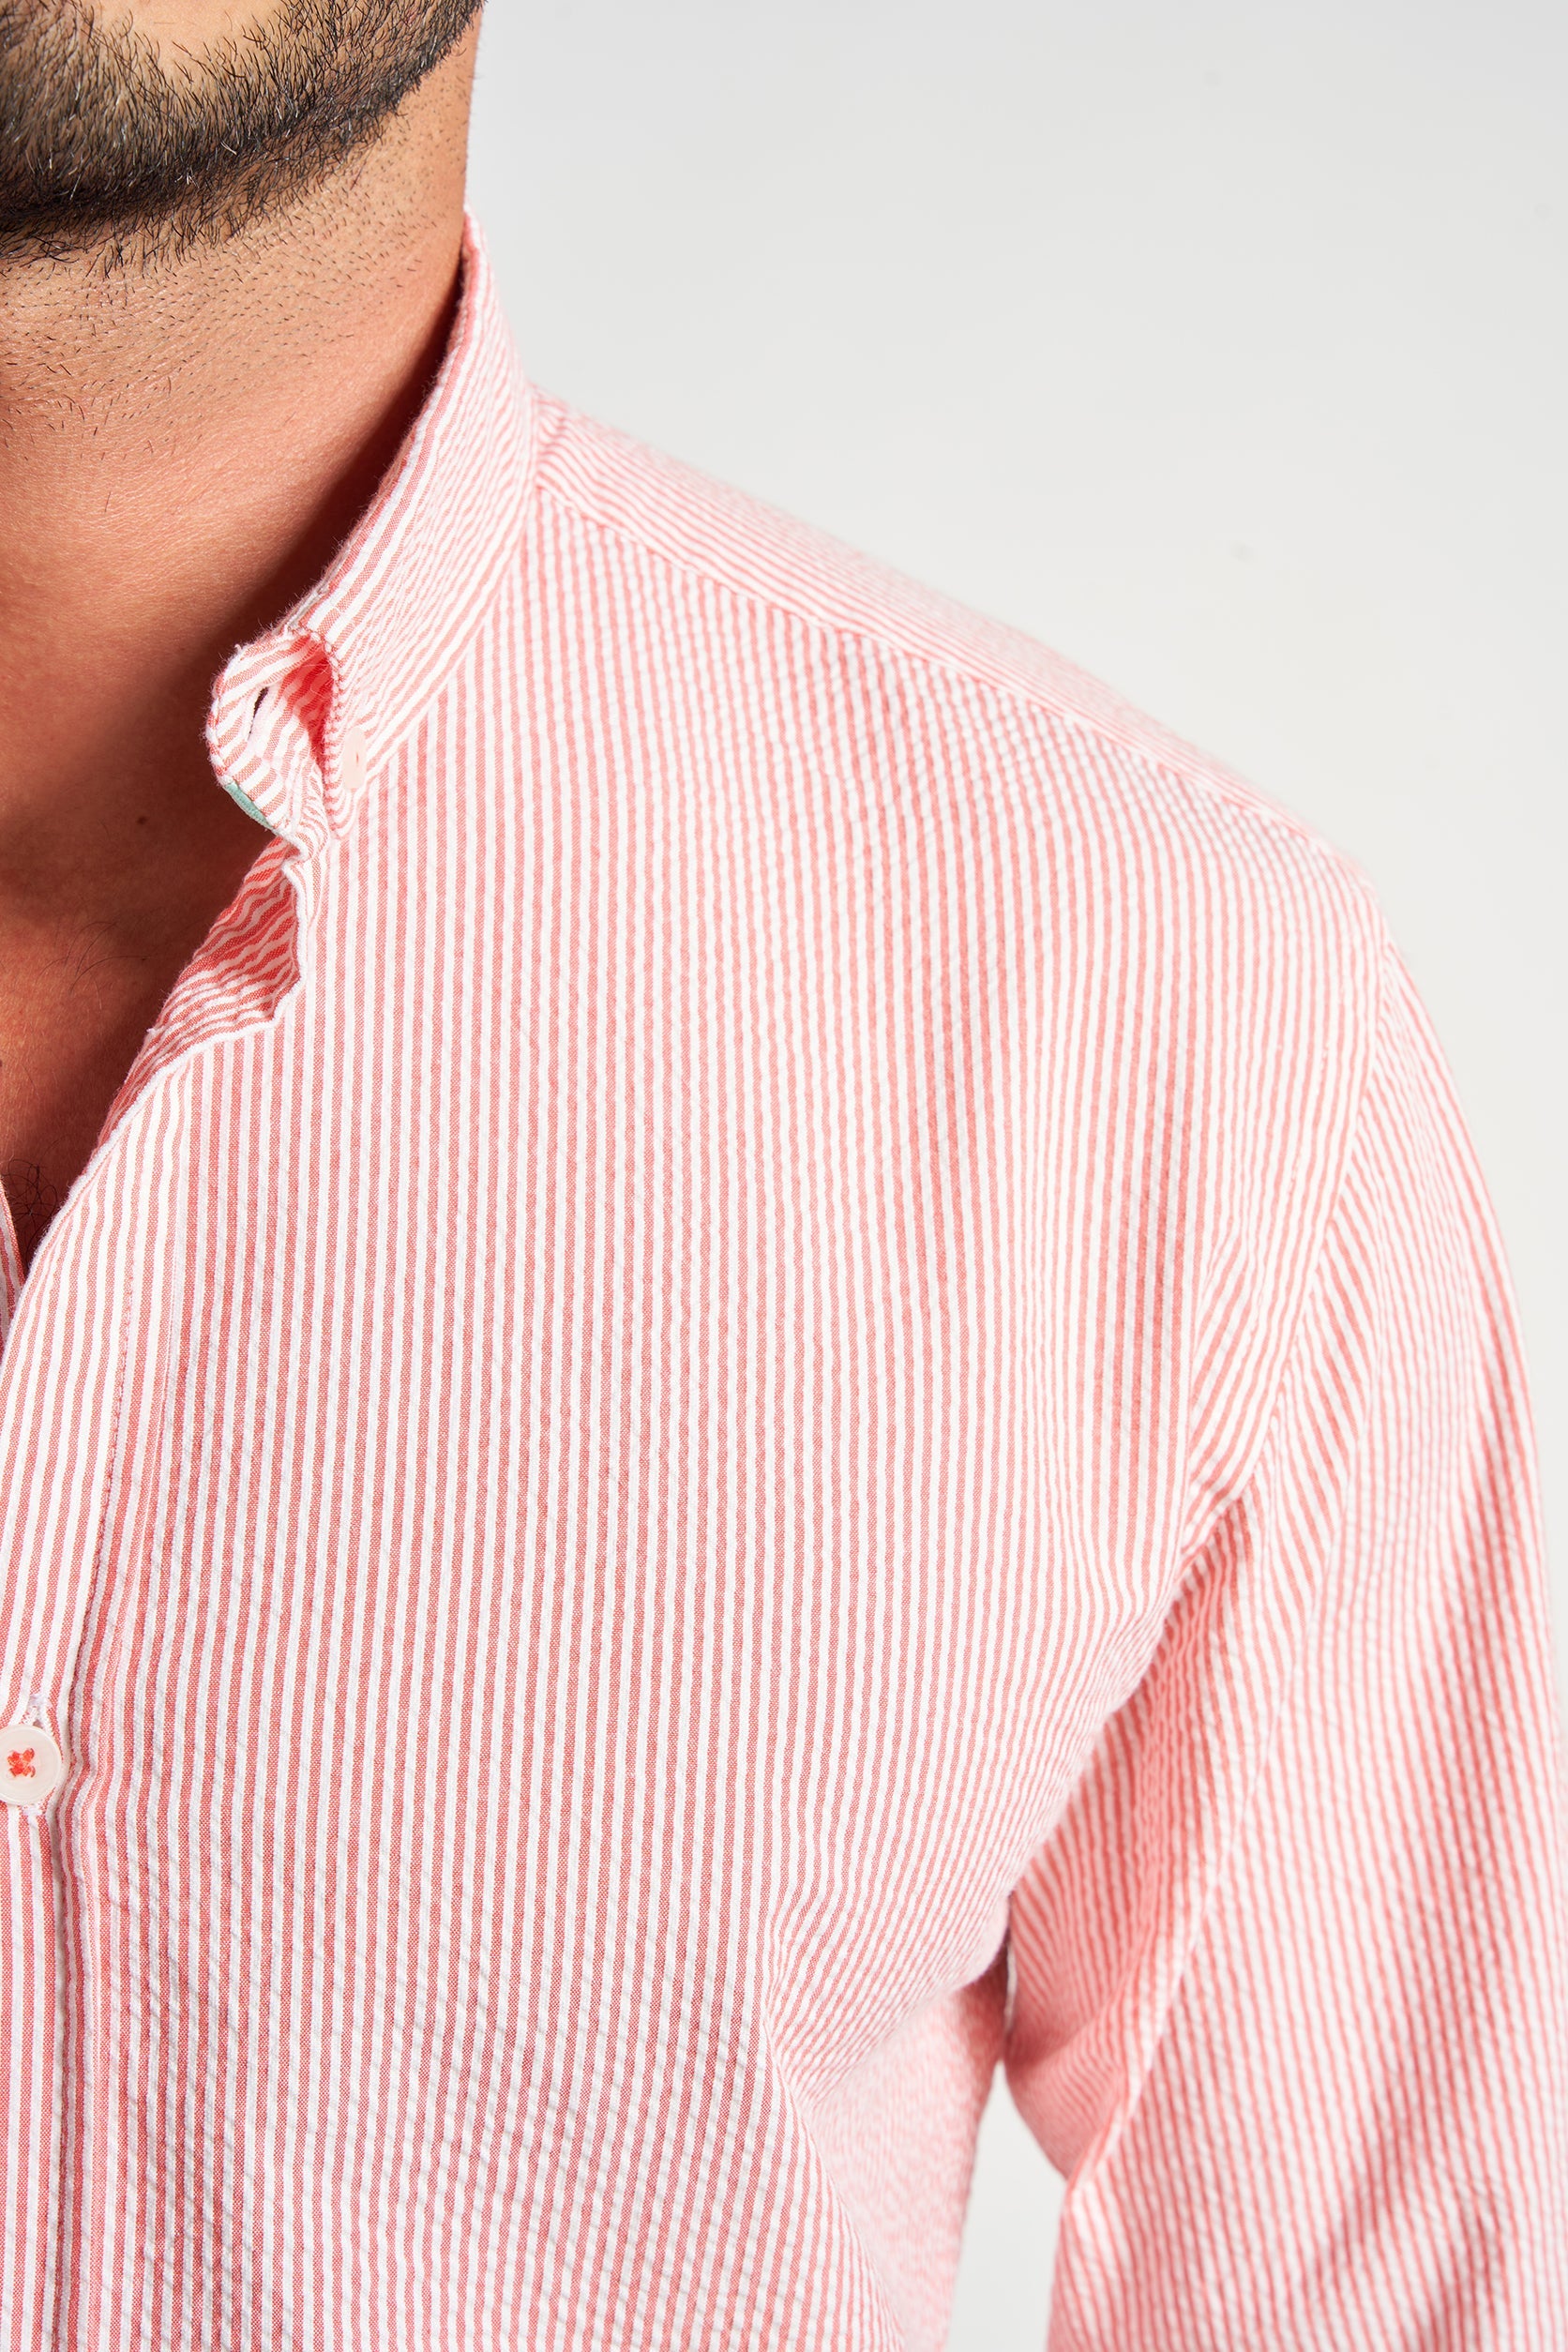 Striped Rose Long Sleeve Shirt(642-643)